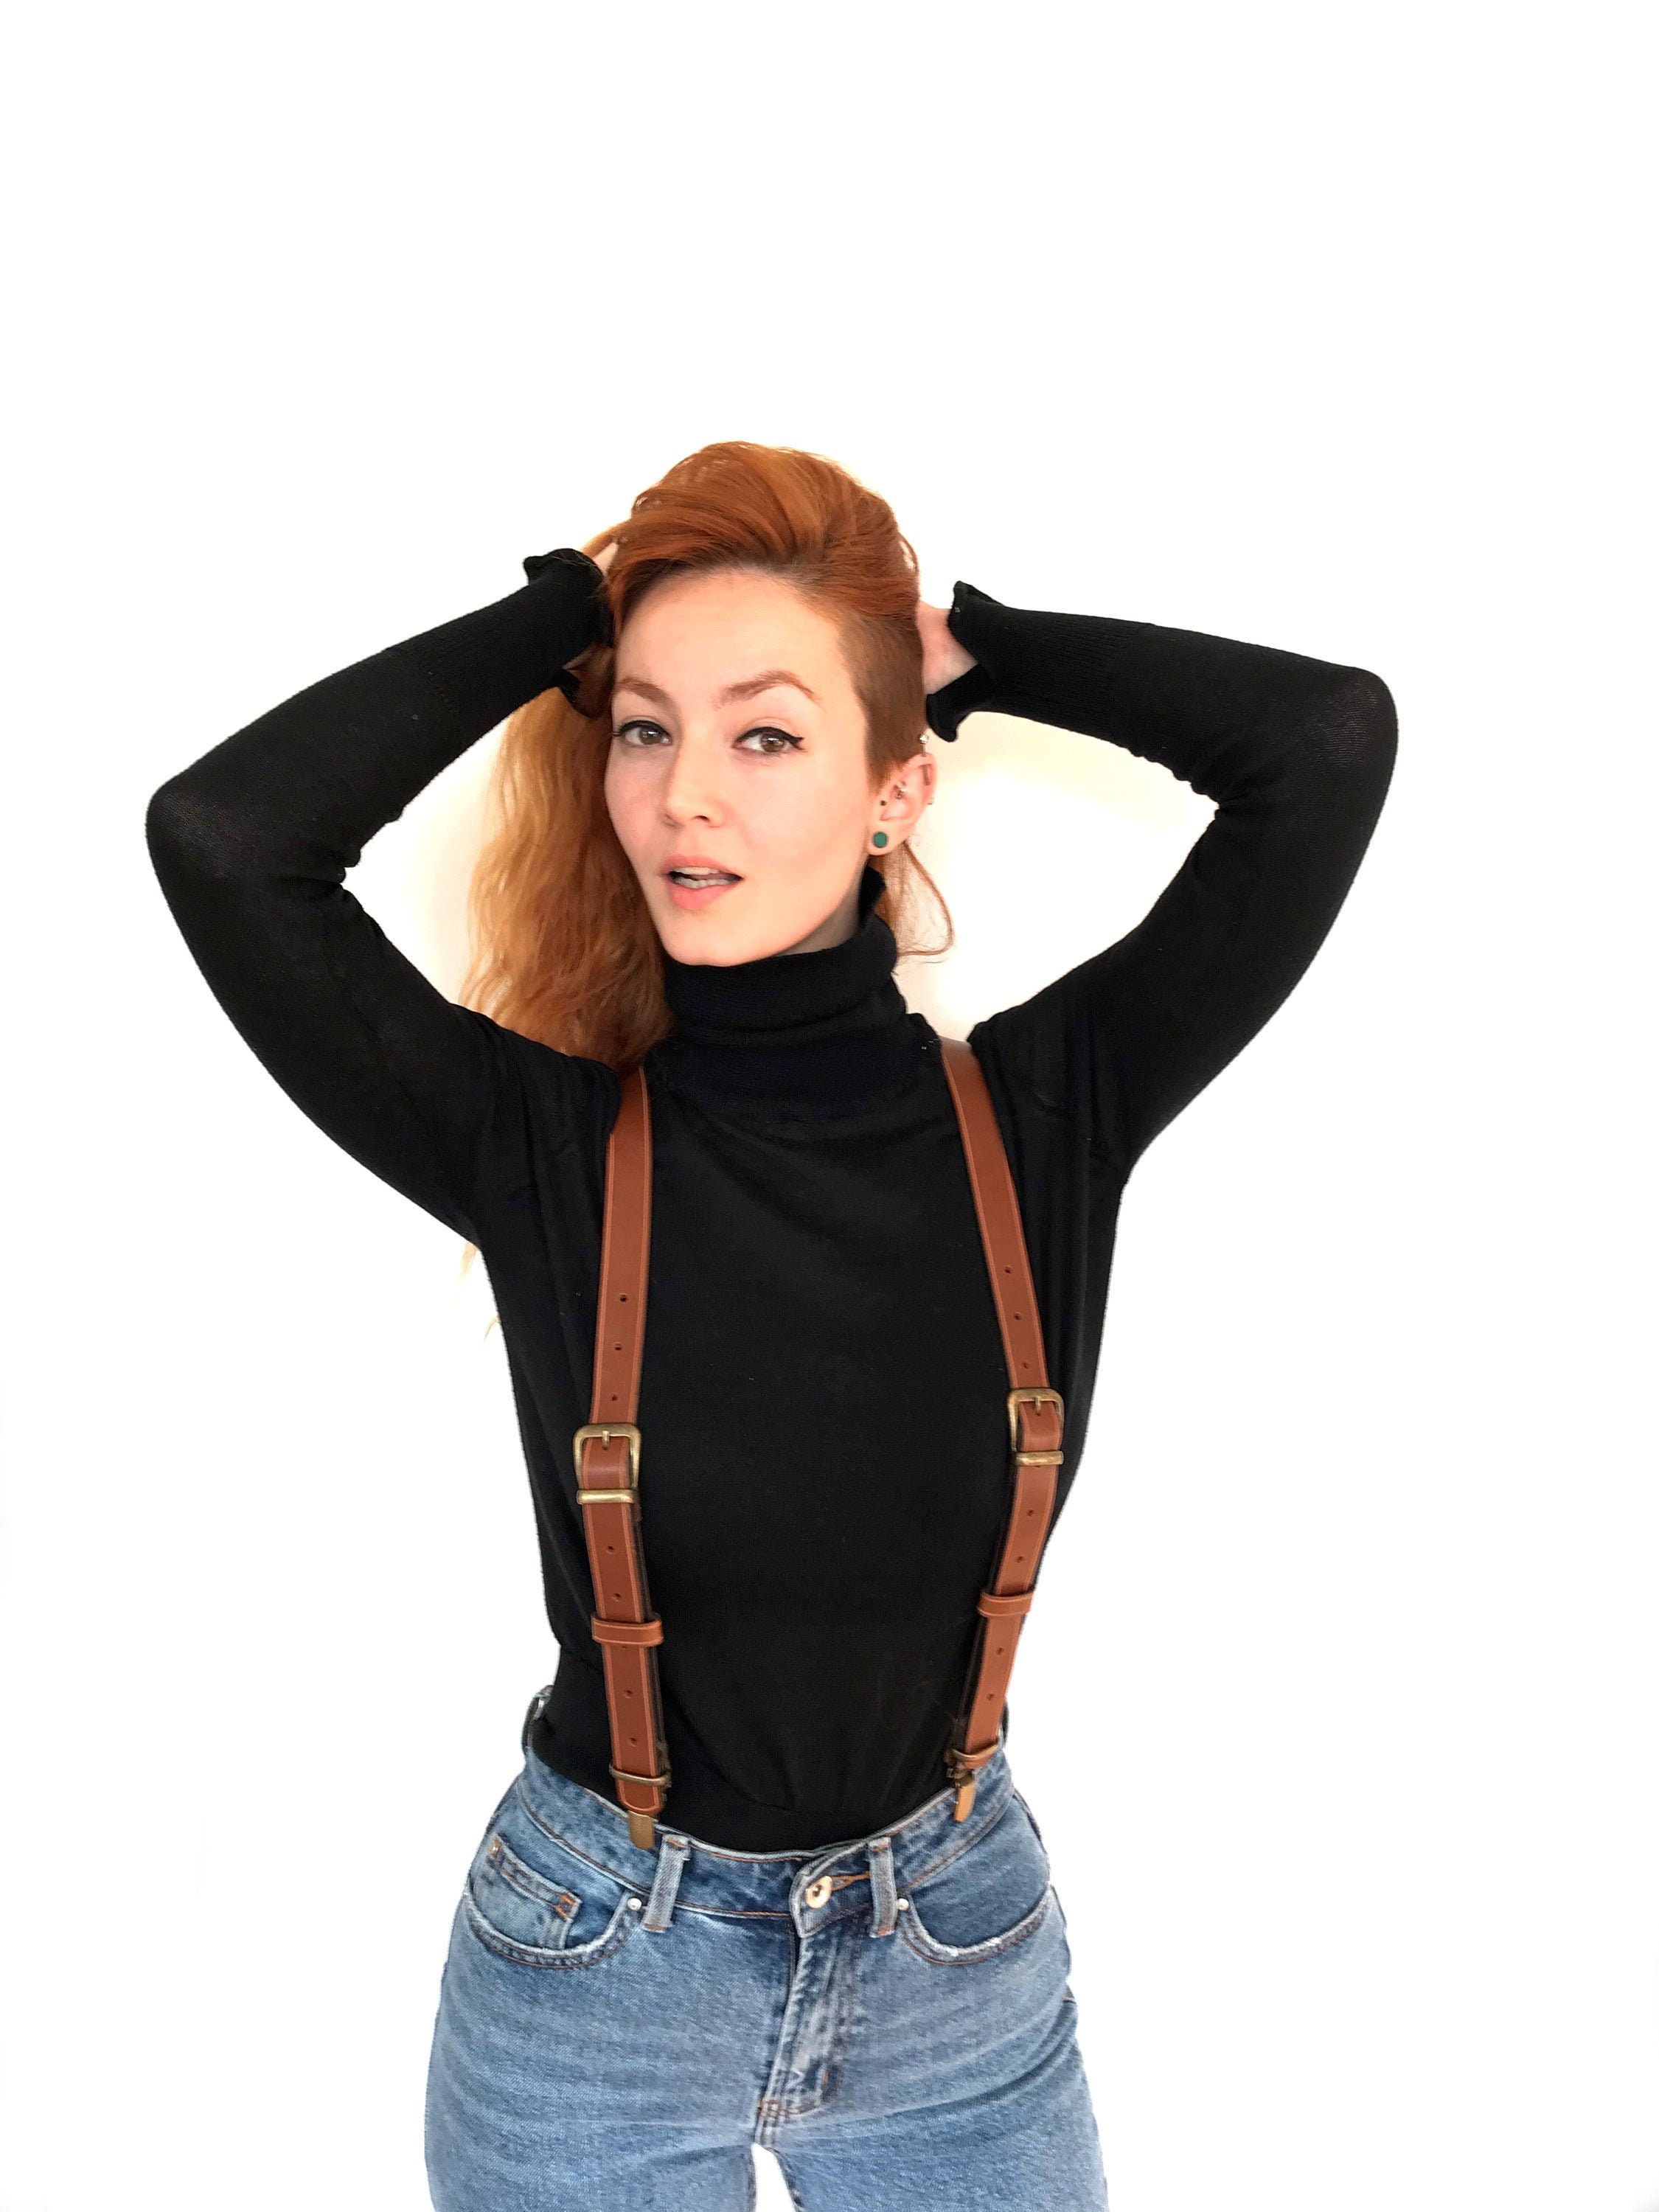 Women Leather Suspenders Women Braces Adjustable Suspenders Etsy